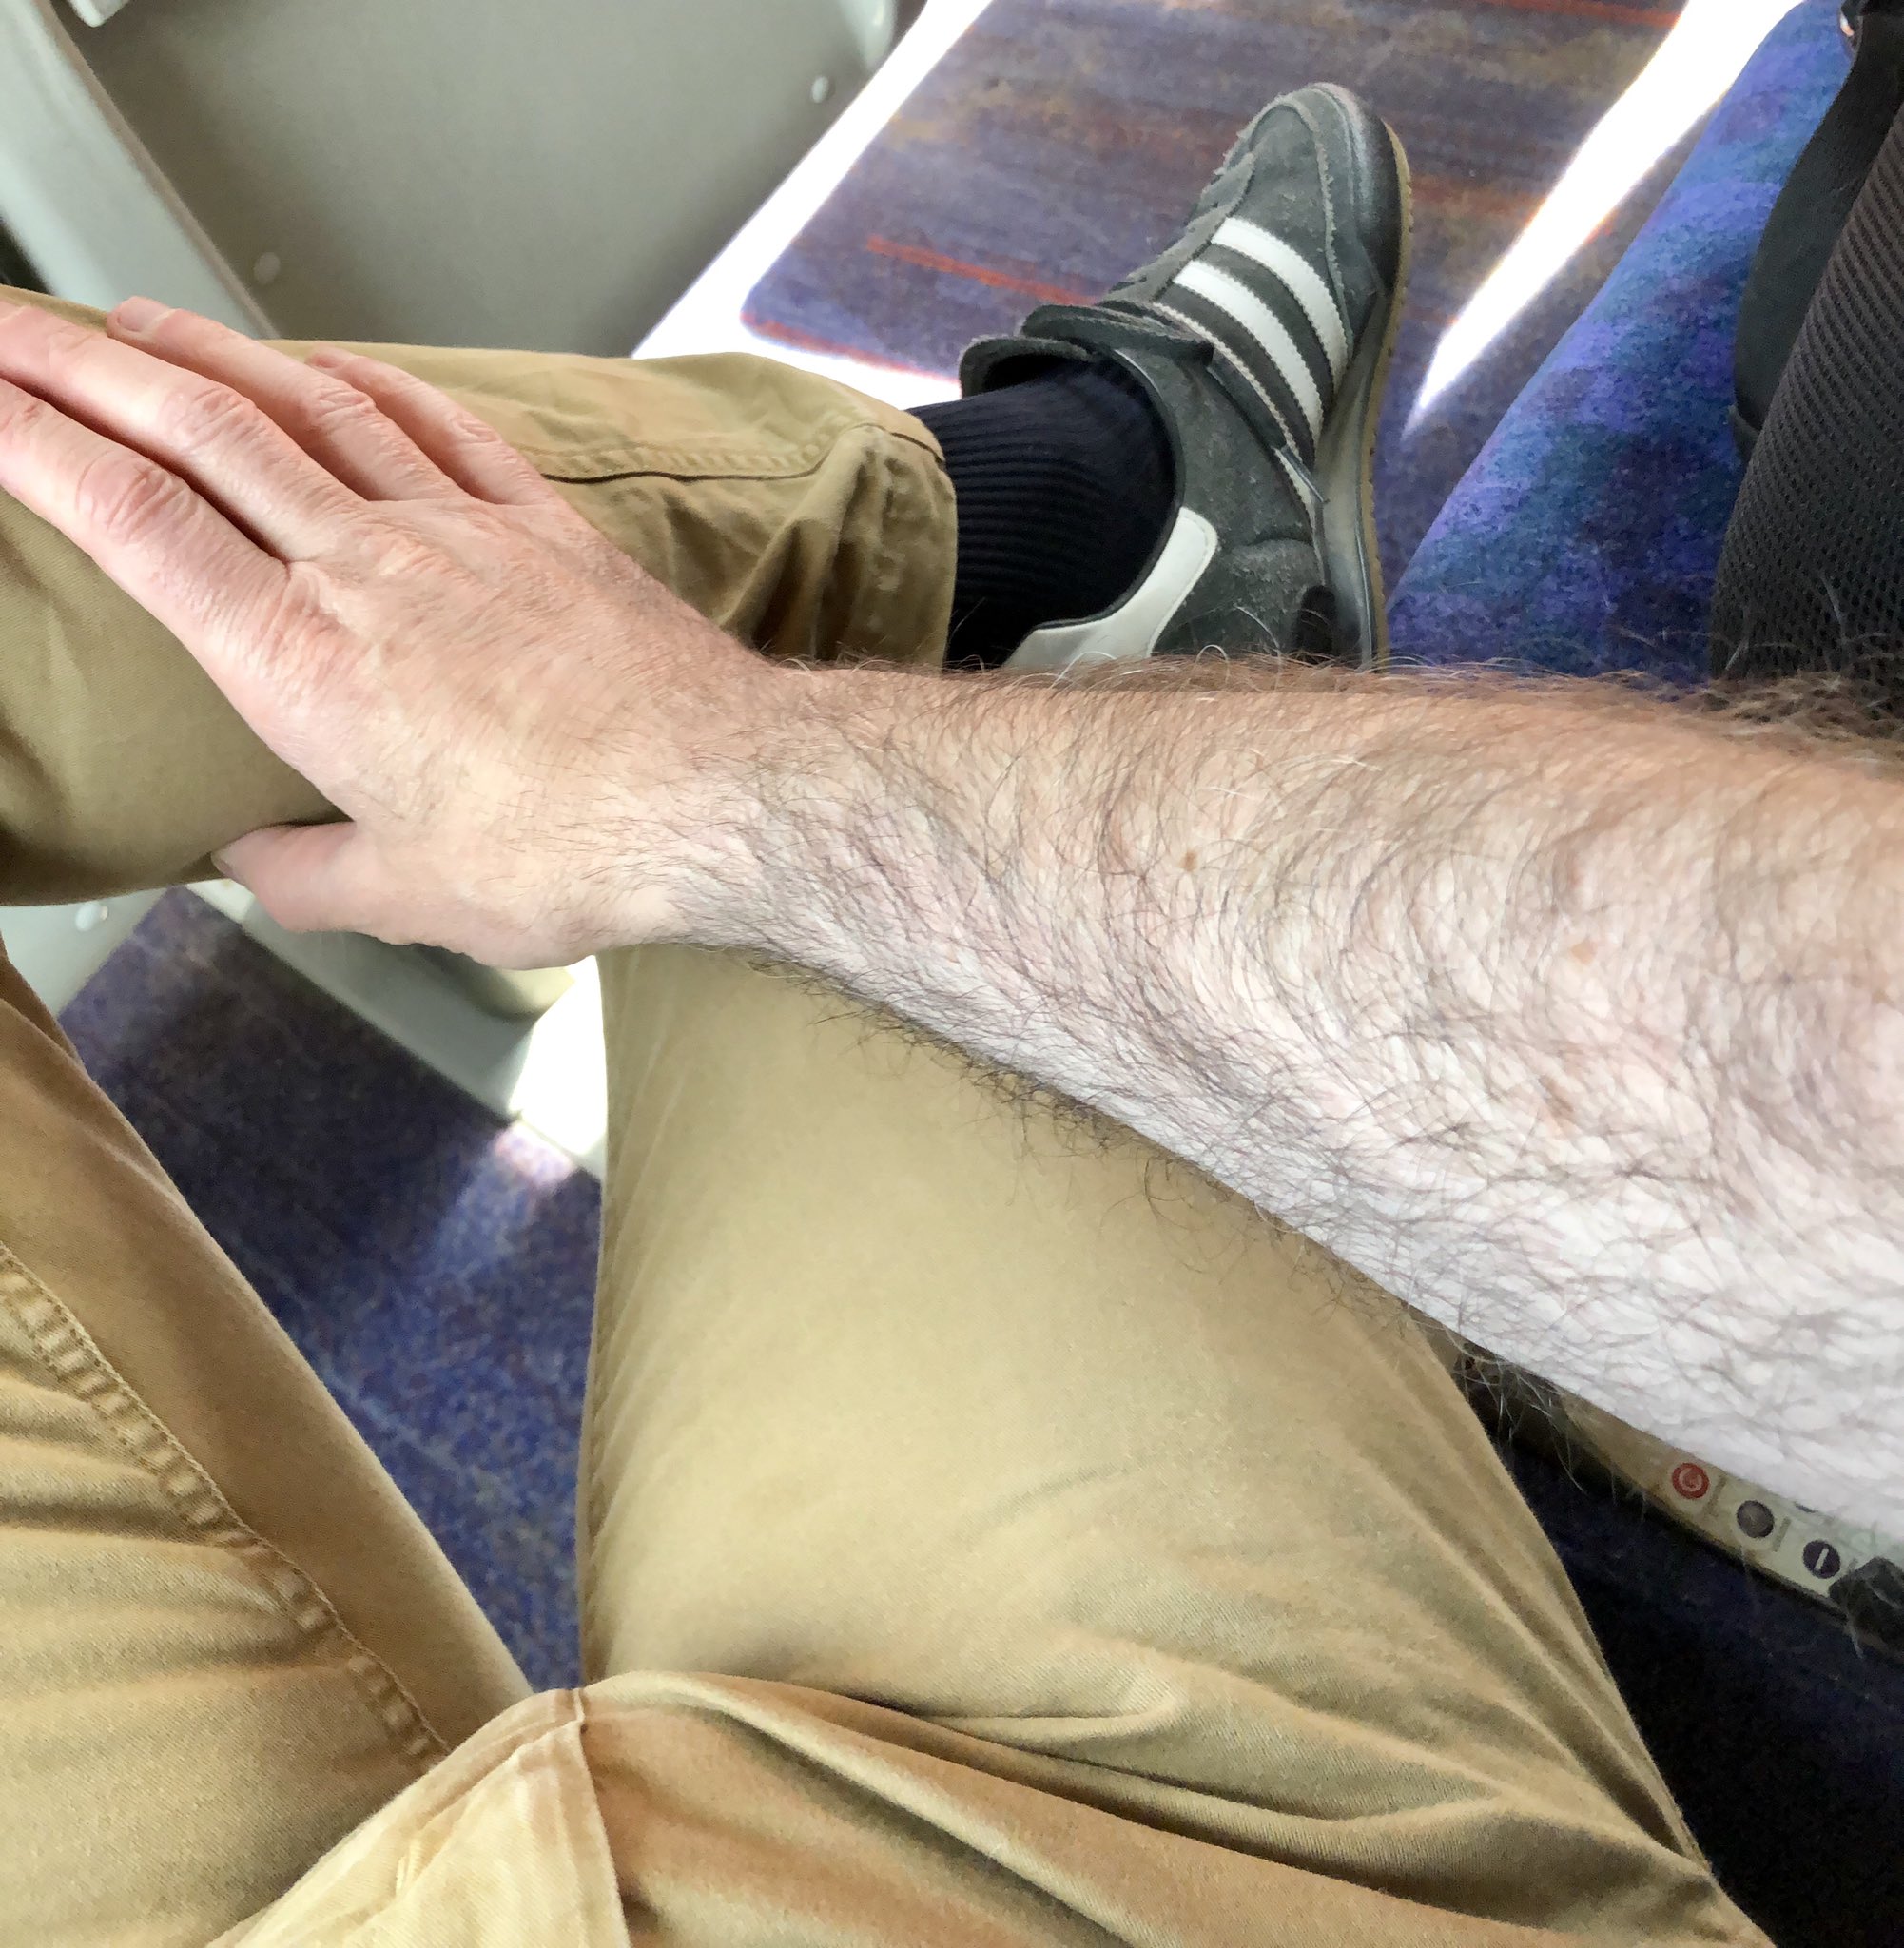 Spanker on X: Long train journey boy, crotch n feet gonna be sweaty, hope  yer ready for them  / X